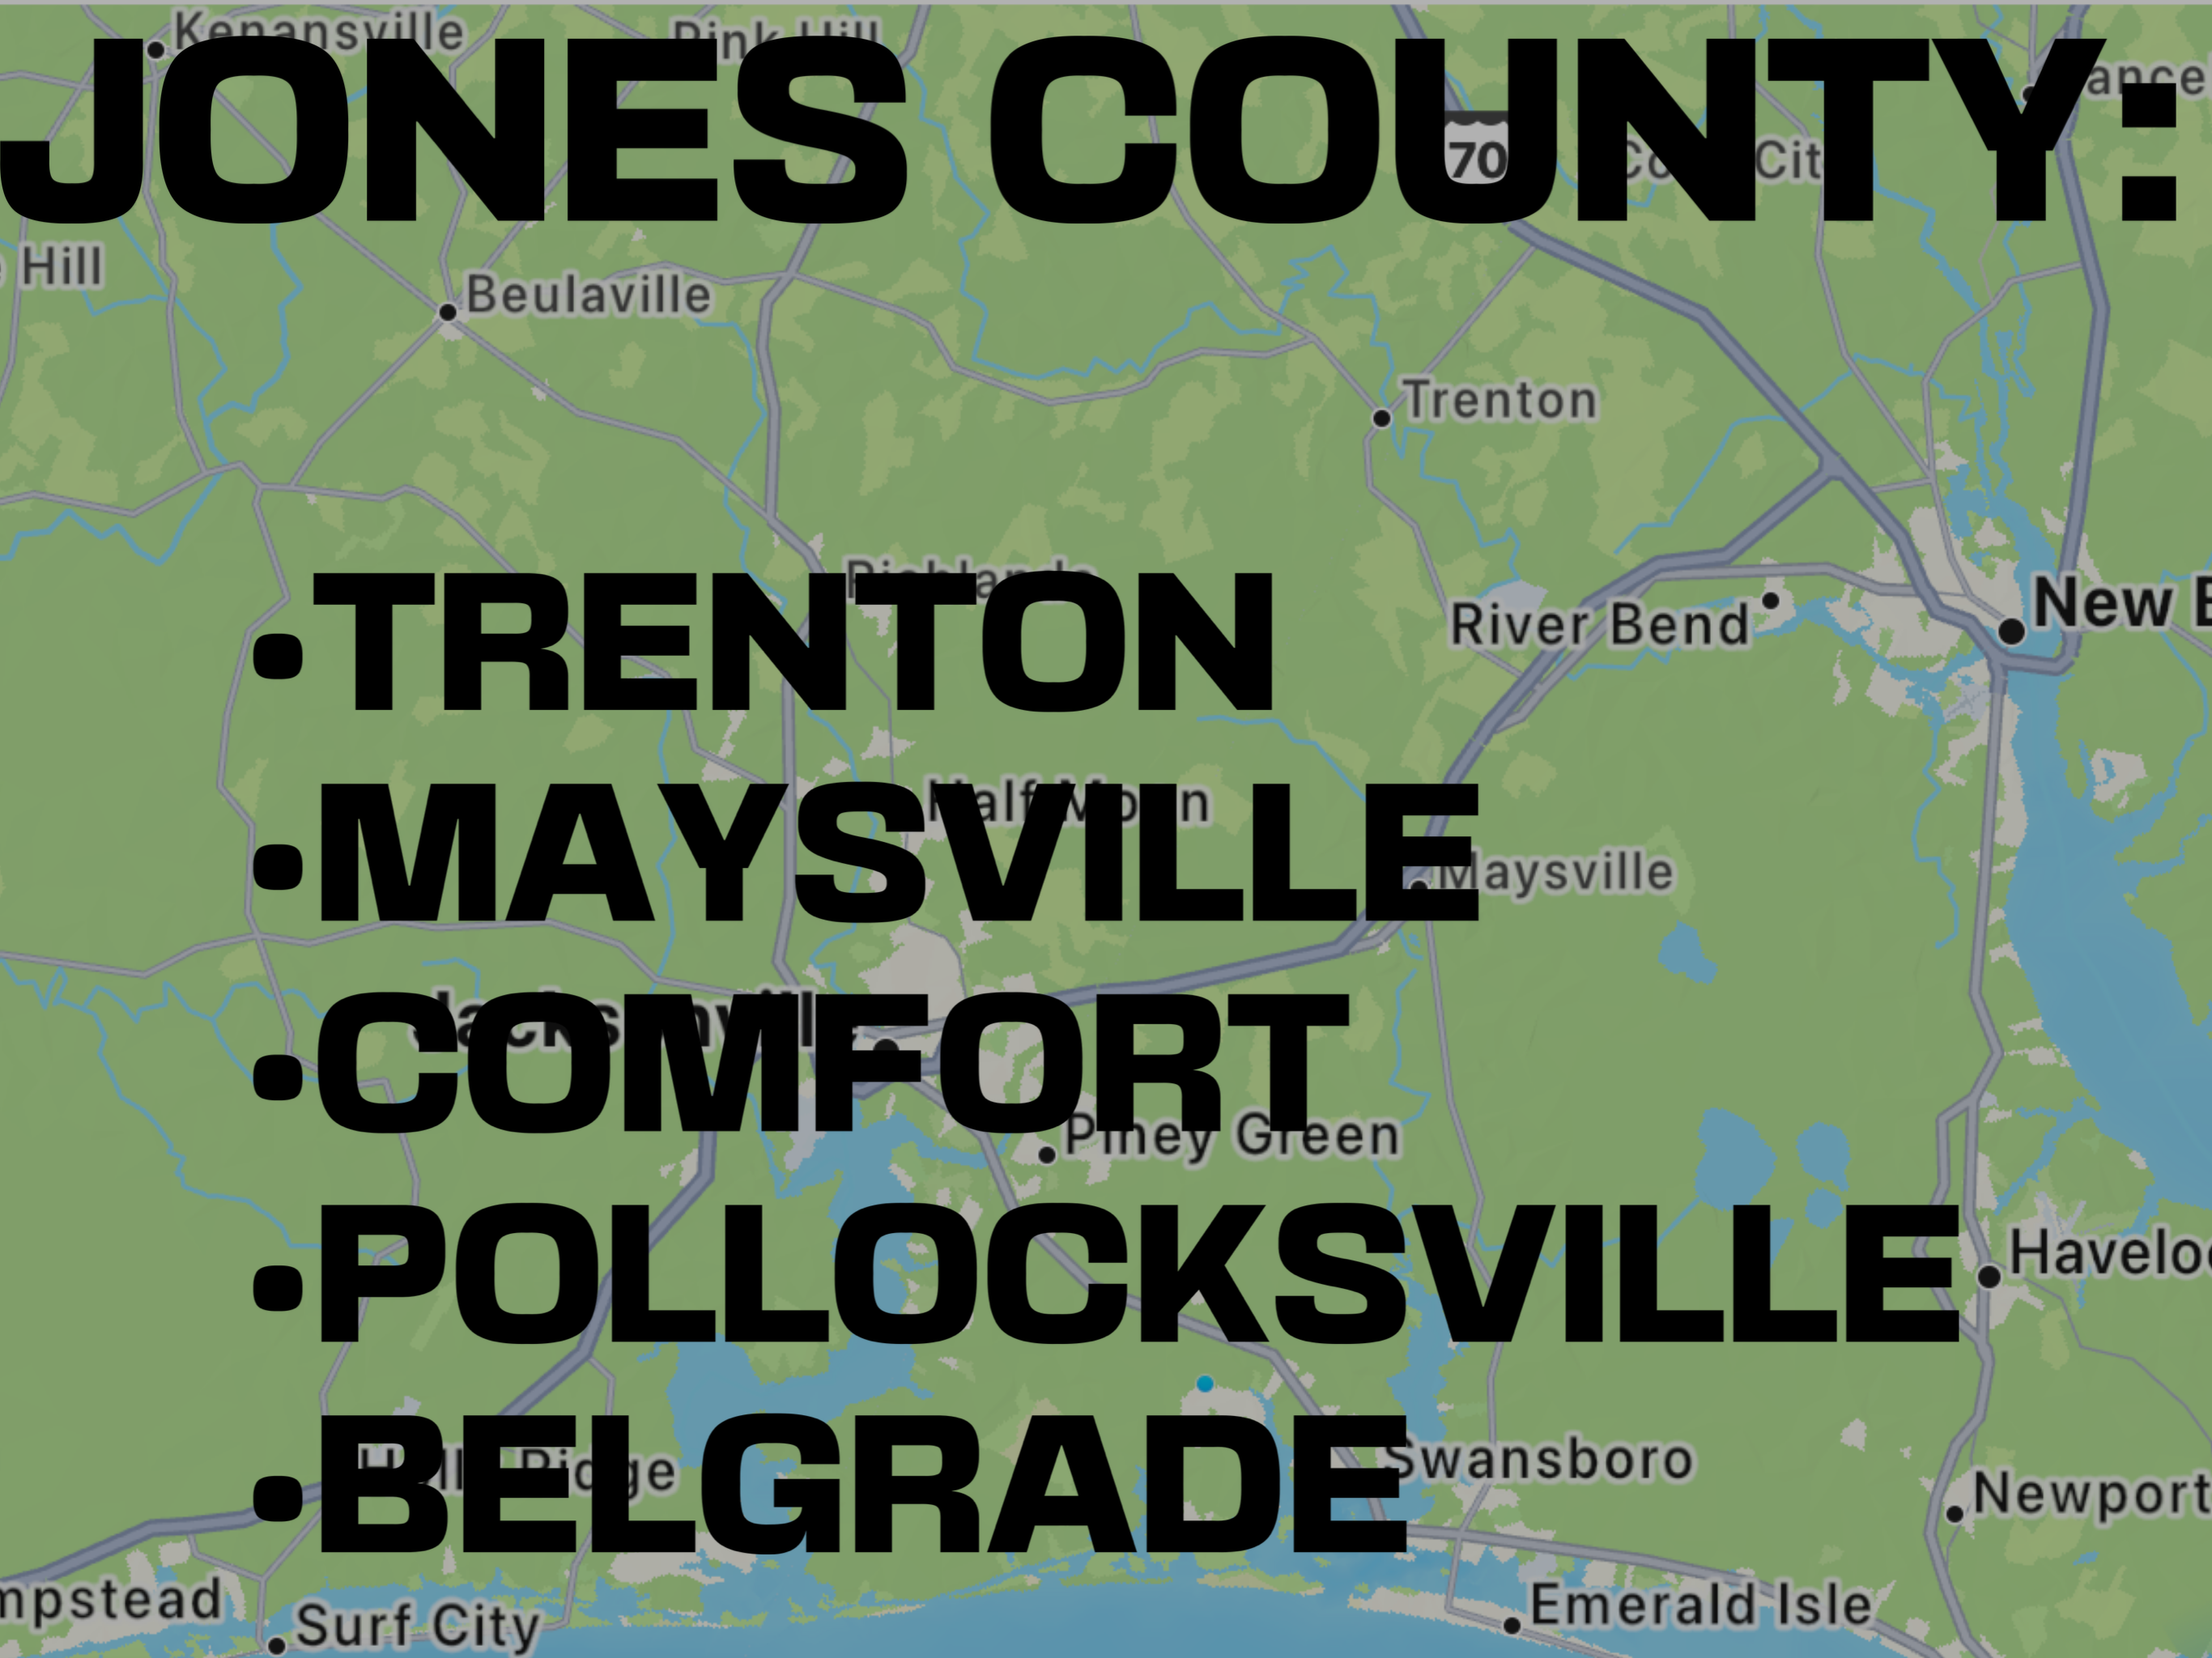 Carolina EartHWerx serves jones county North Carolina which consists of Trenton, Maysville, comfort, Pollocksville, and Belgrade.